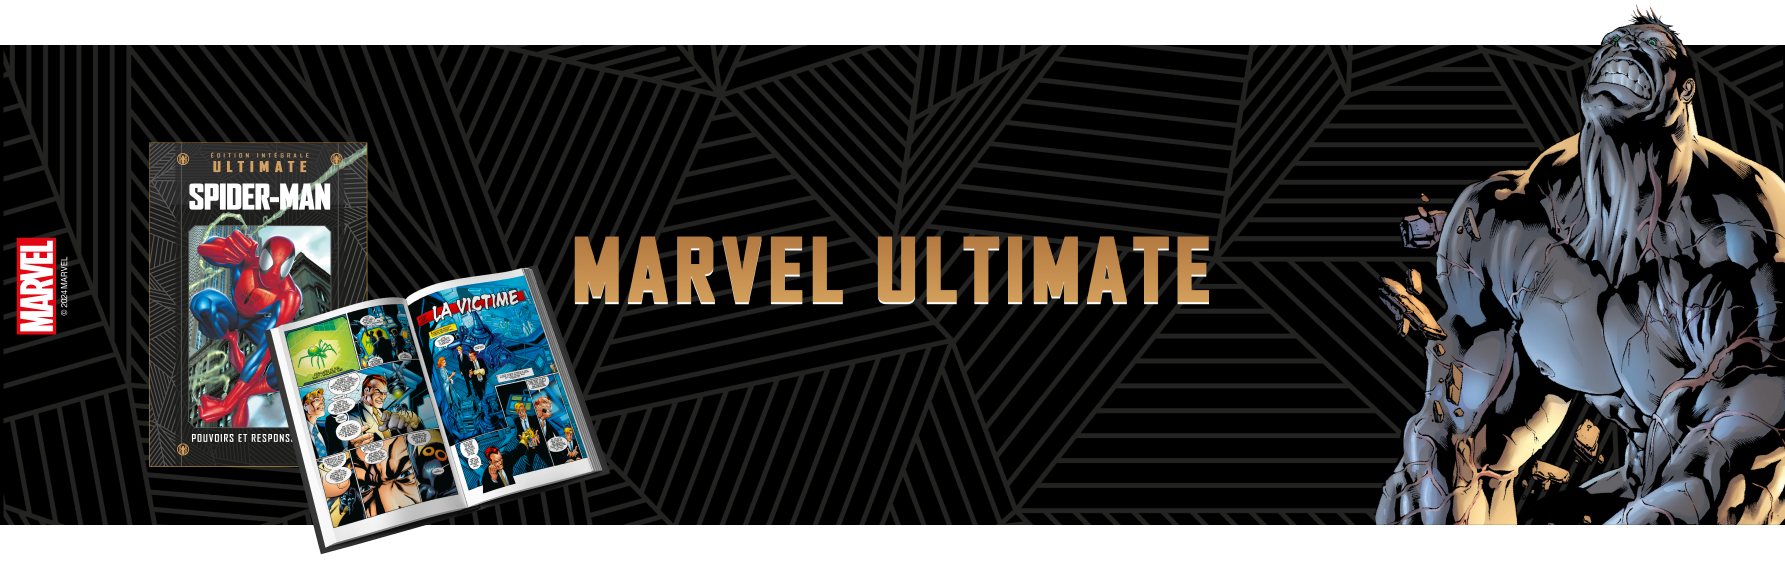 Marvel Ultimate